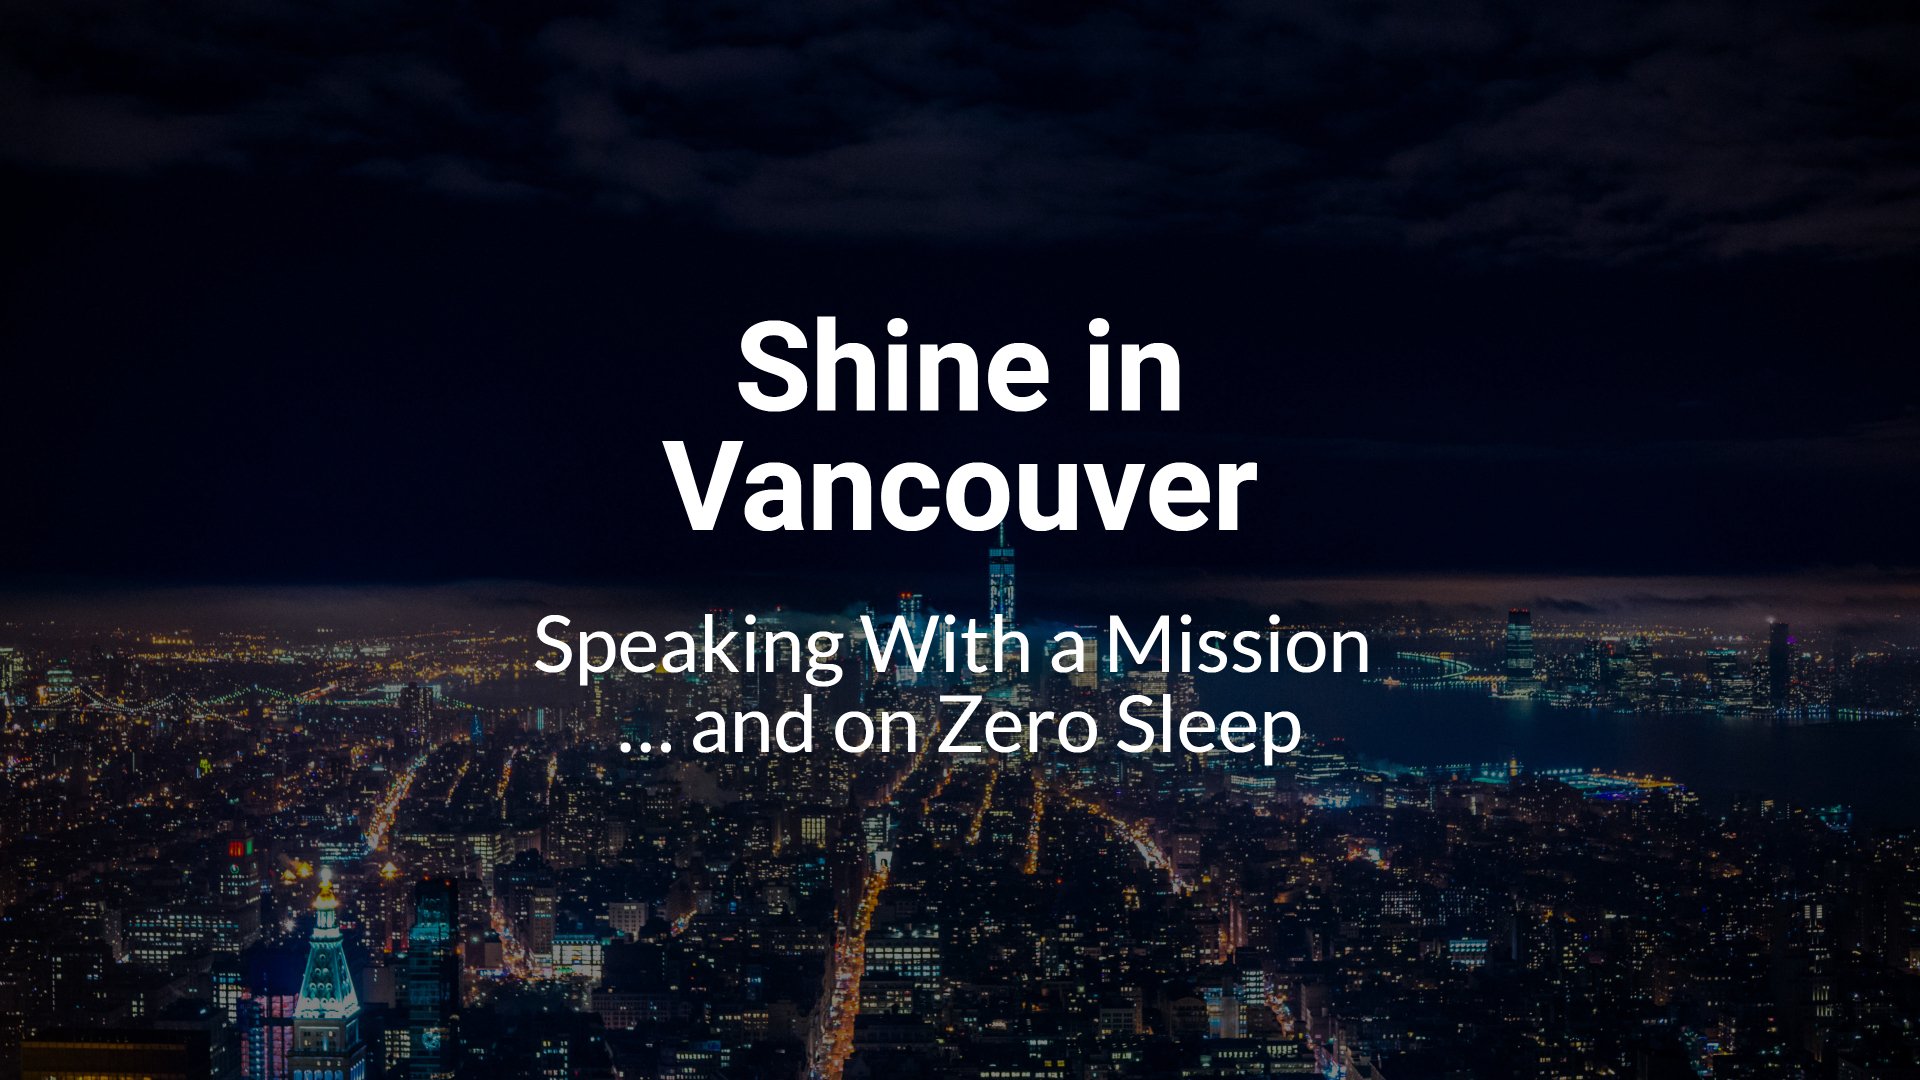 Shine in Vancouver - Vancouver skyline